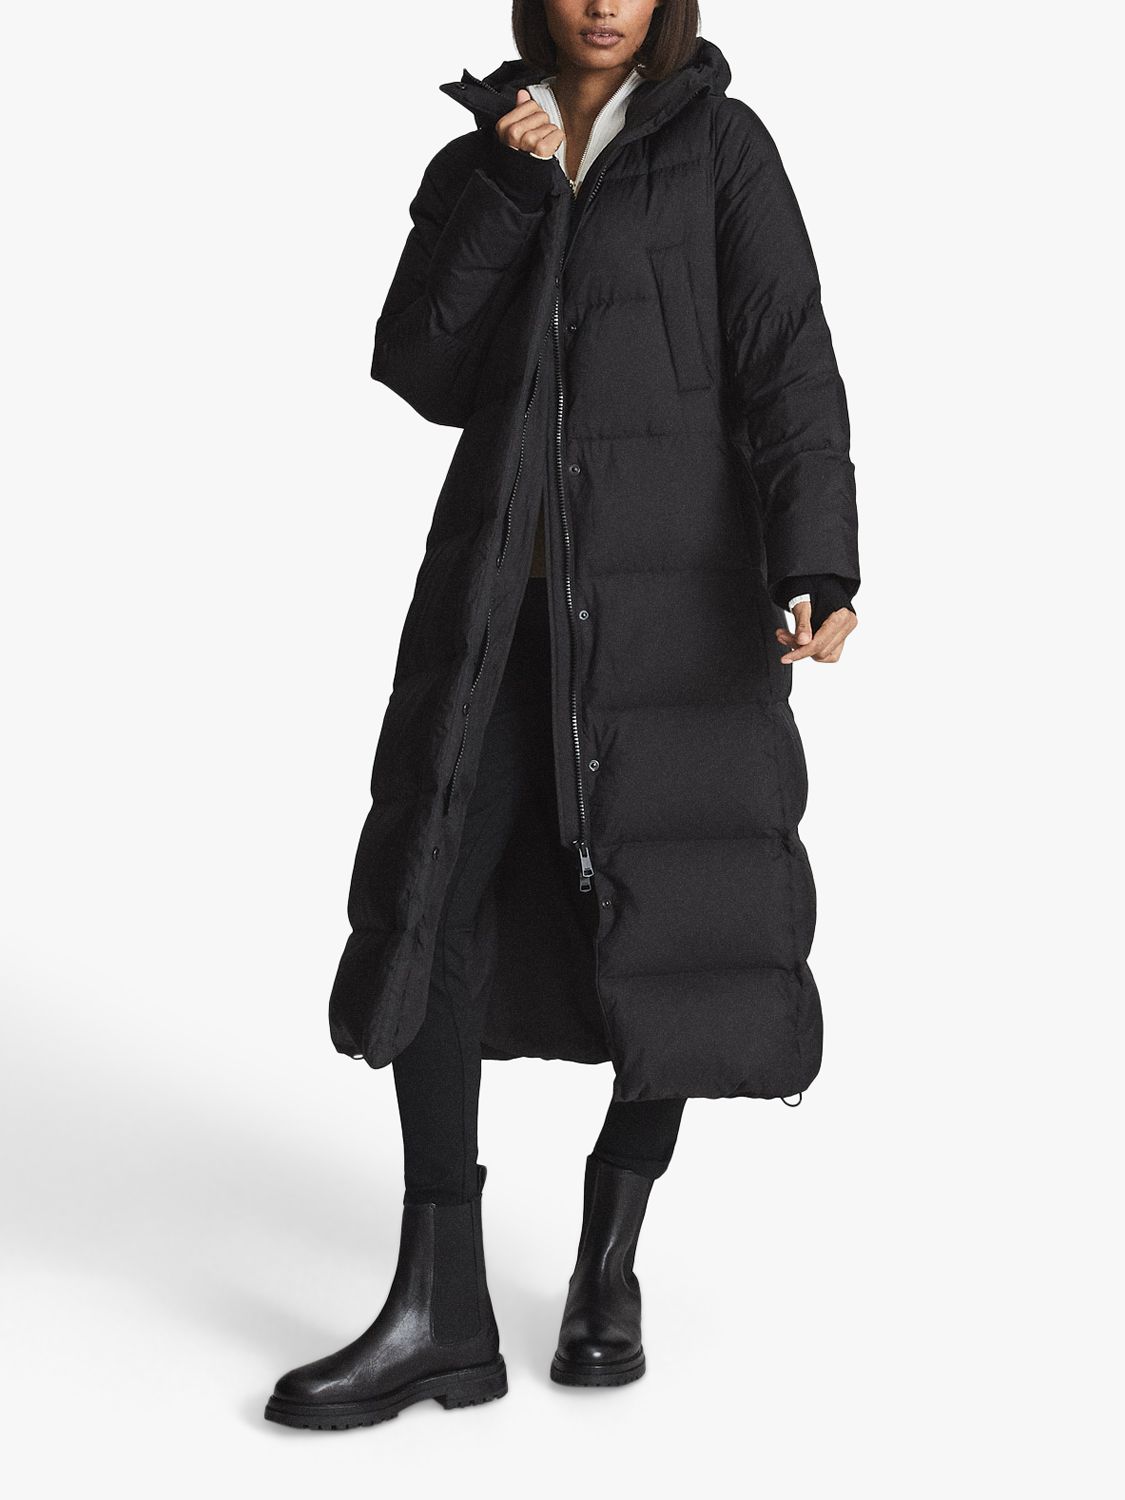 Reiss Tilde Long Quilted Coat, Black at John Lewis & Partners